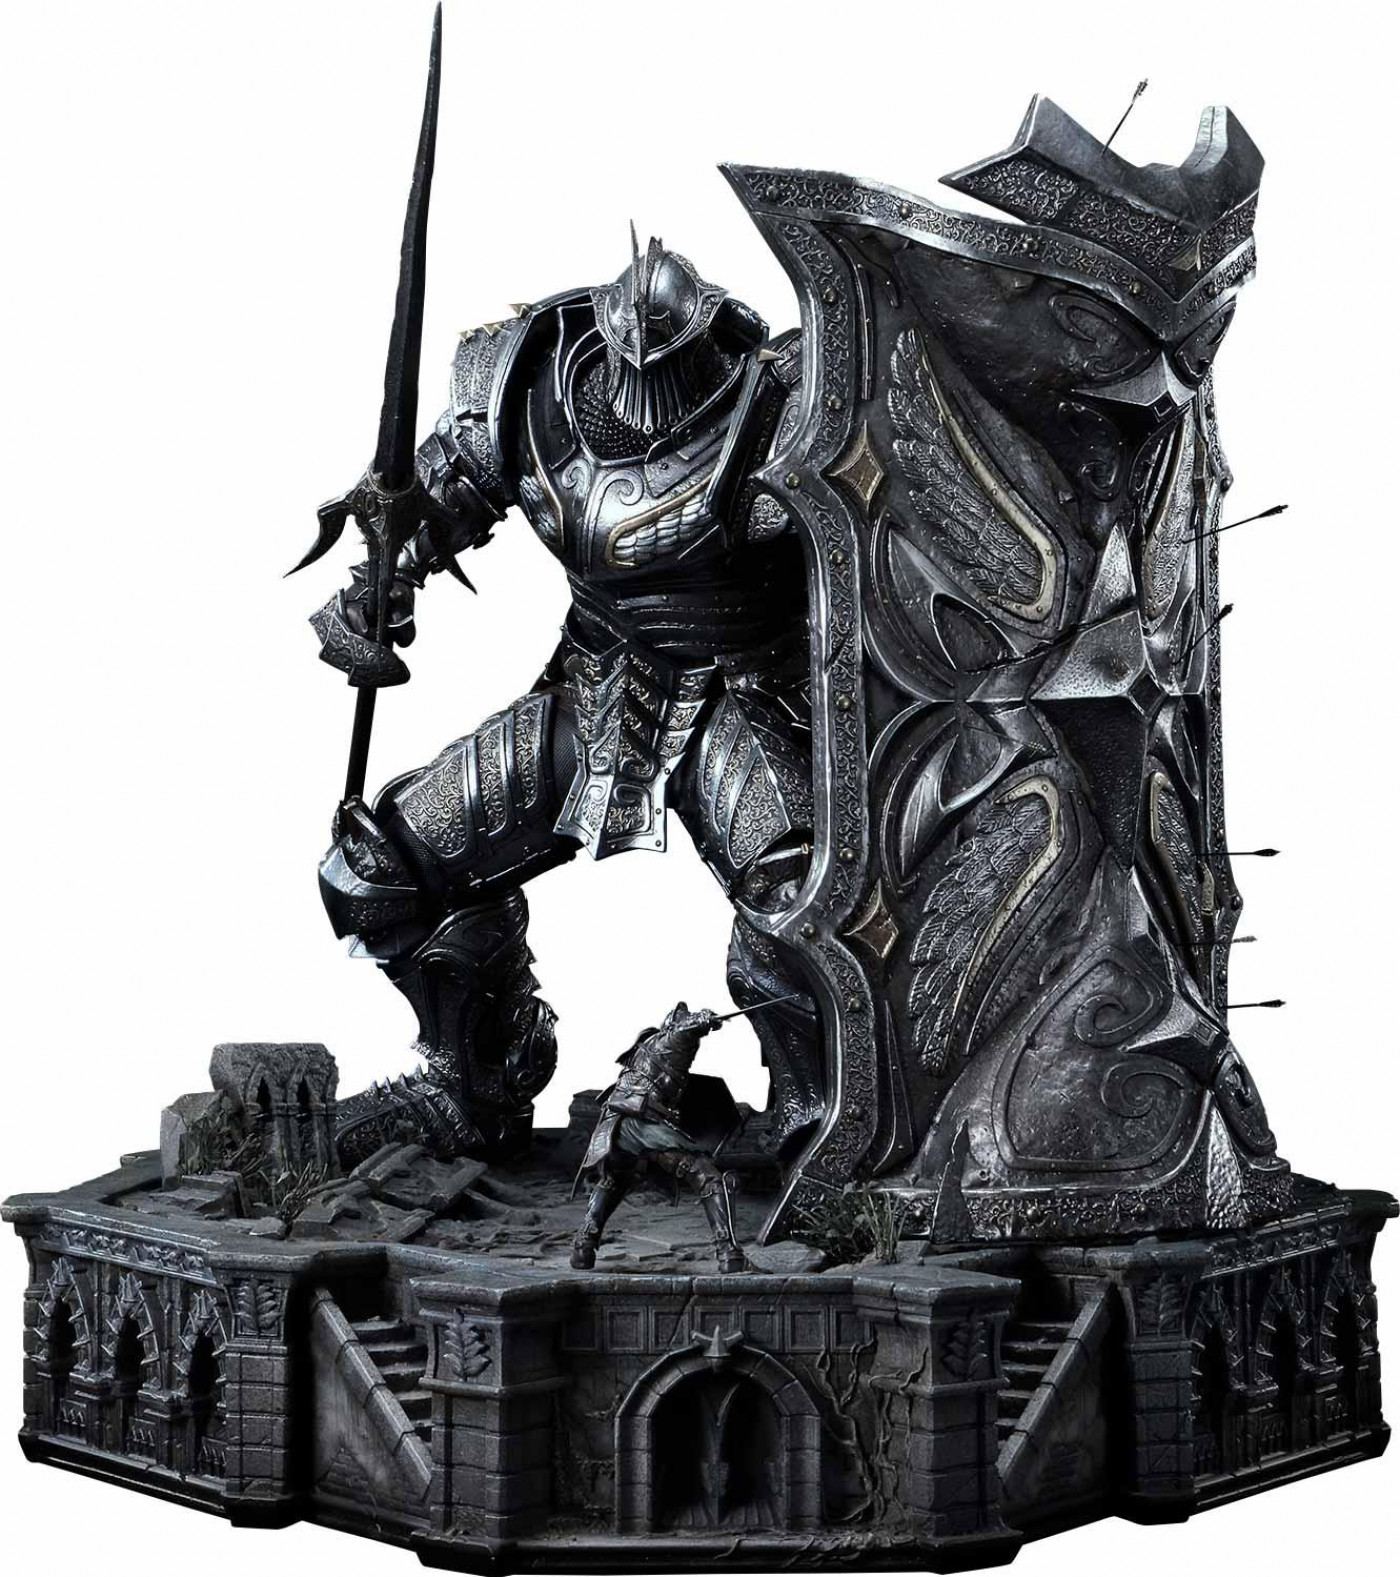 Ultimate Premium Masterline Demon's Souls Tower Knight DX Bonus